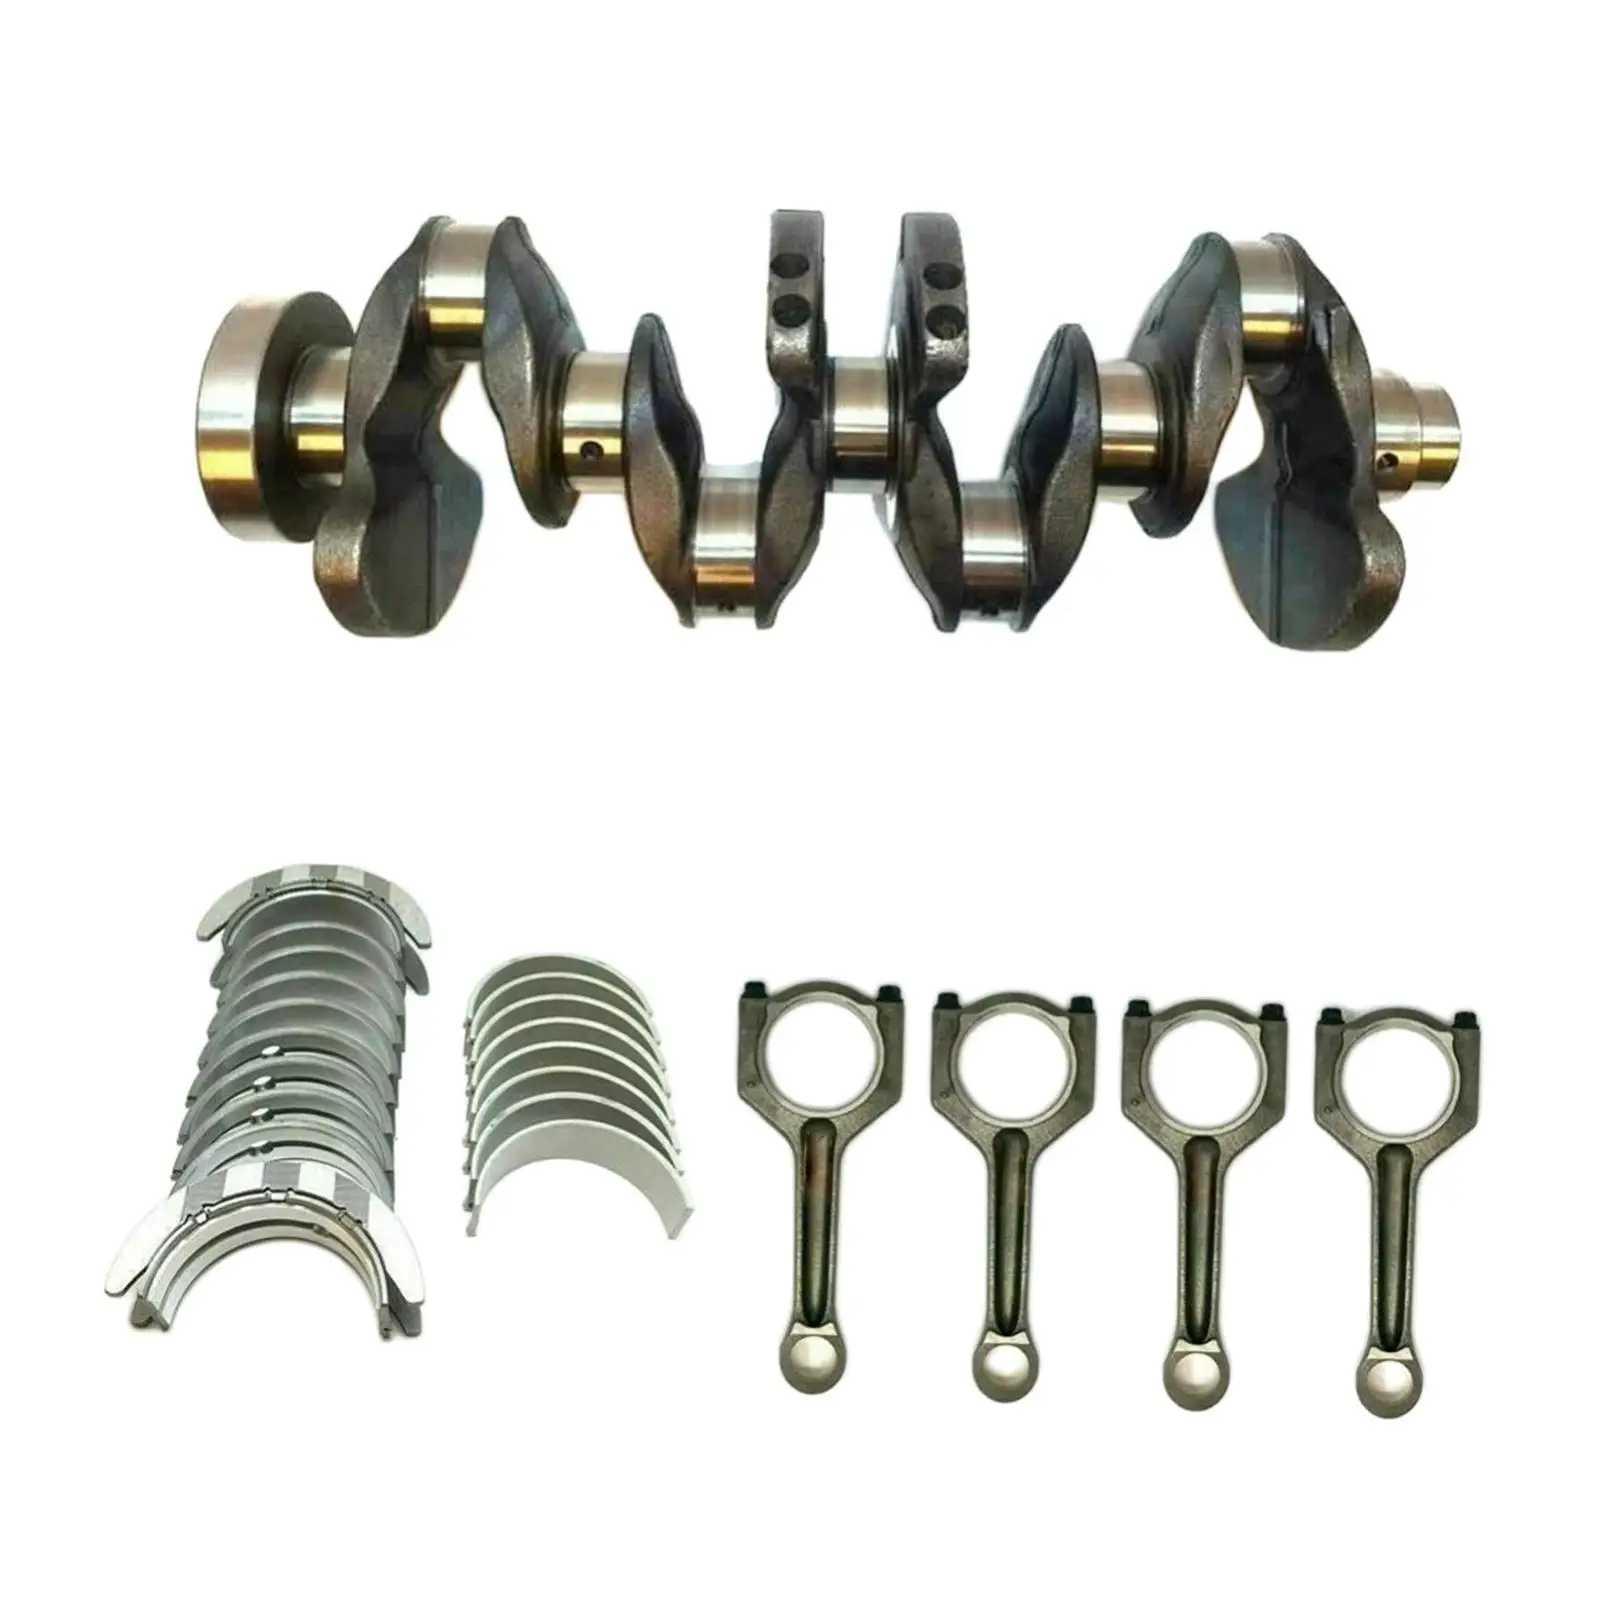 

Engine Crankshaft Bearings Set Car Replacement Connecting Rod Set 11217640165 for BMW 320i 228i x3 x4 Sturdy